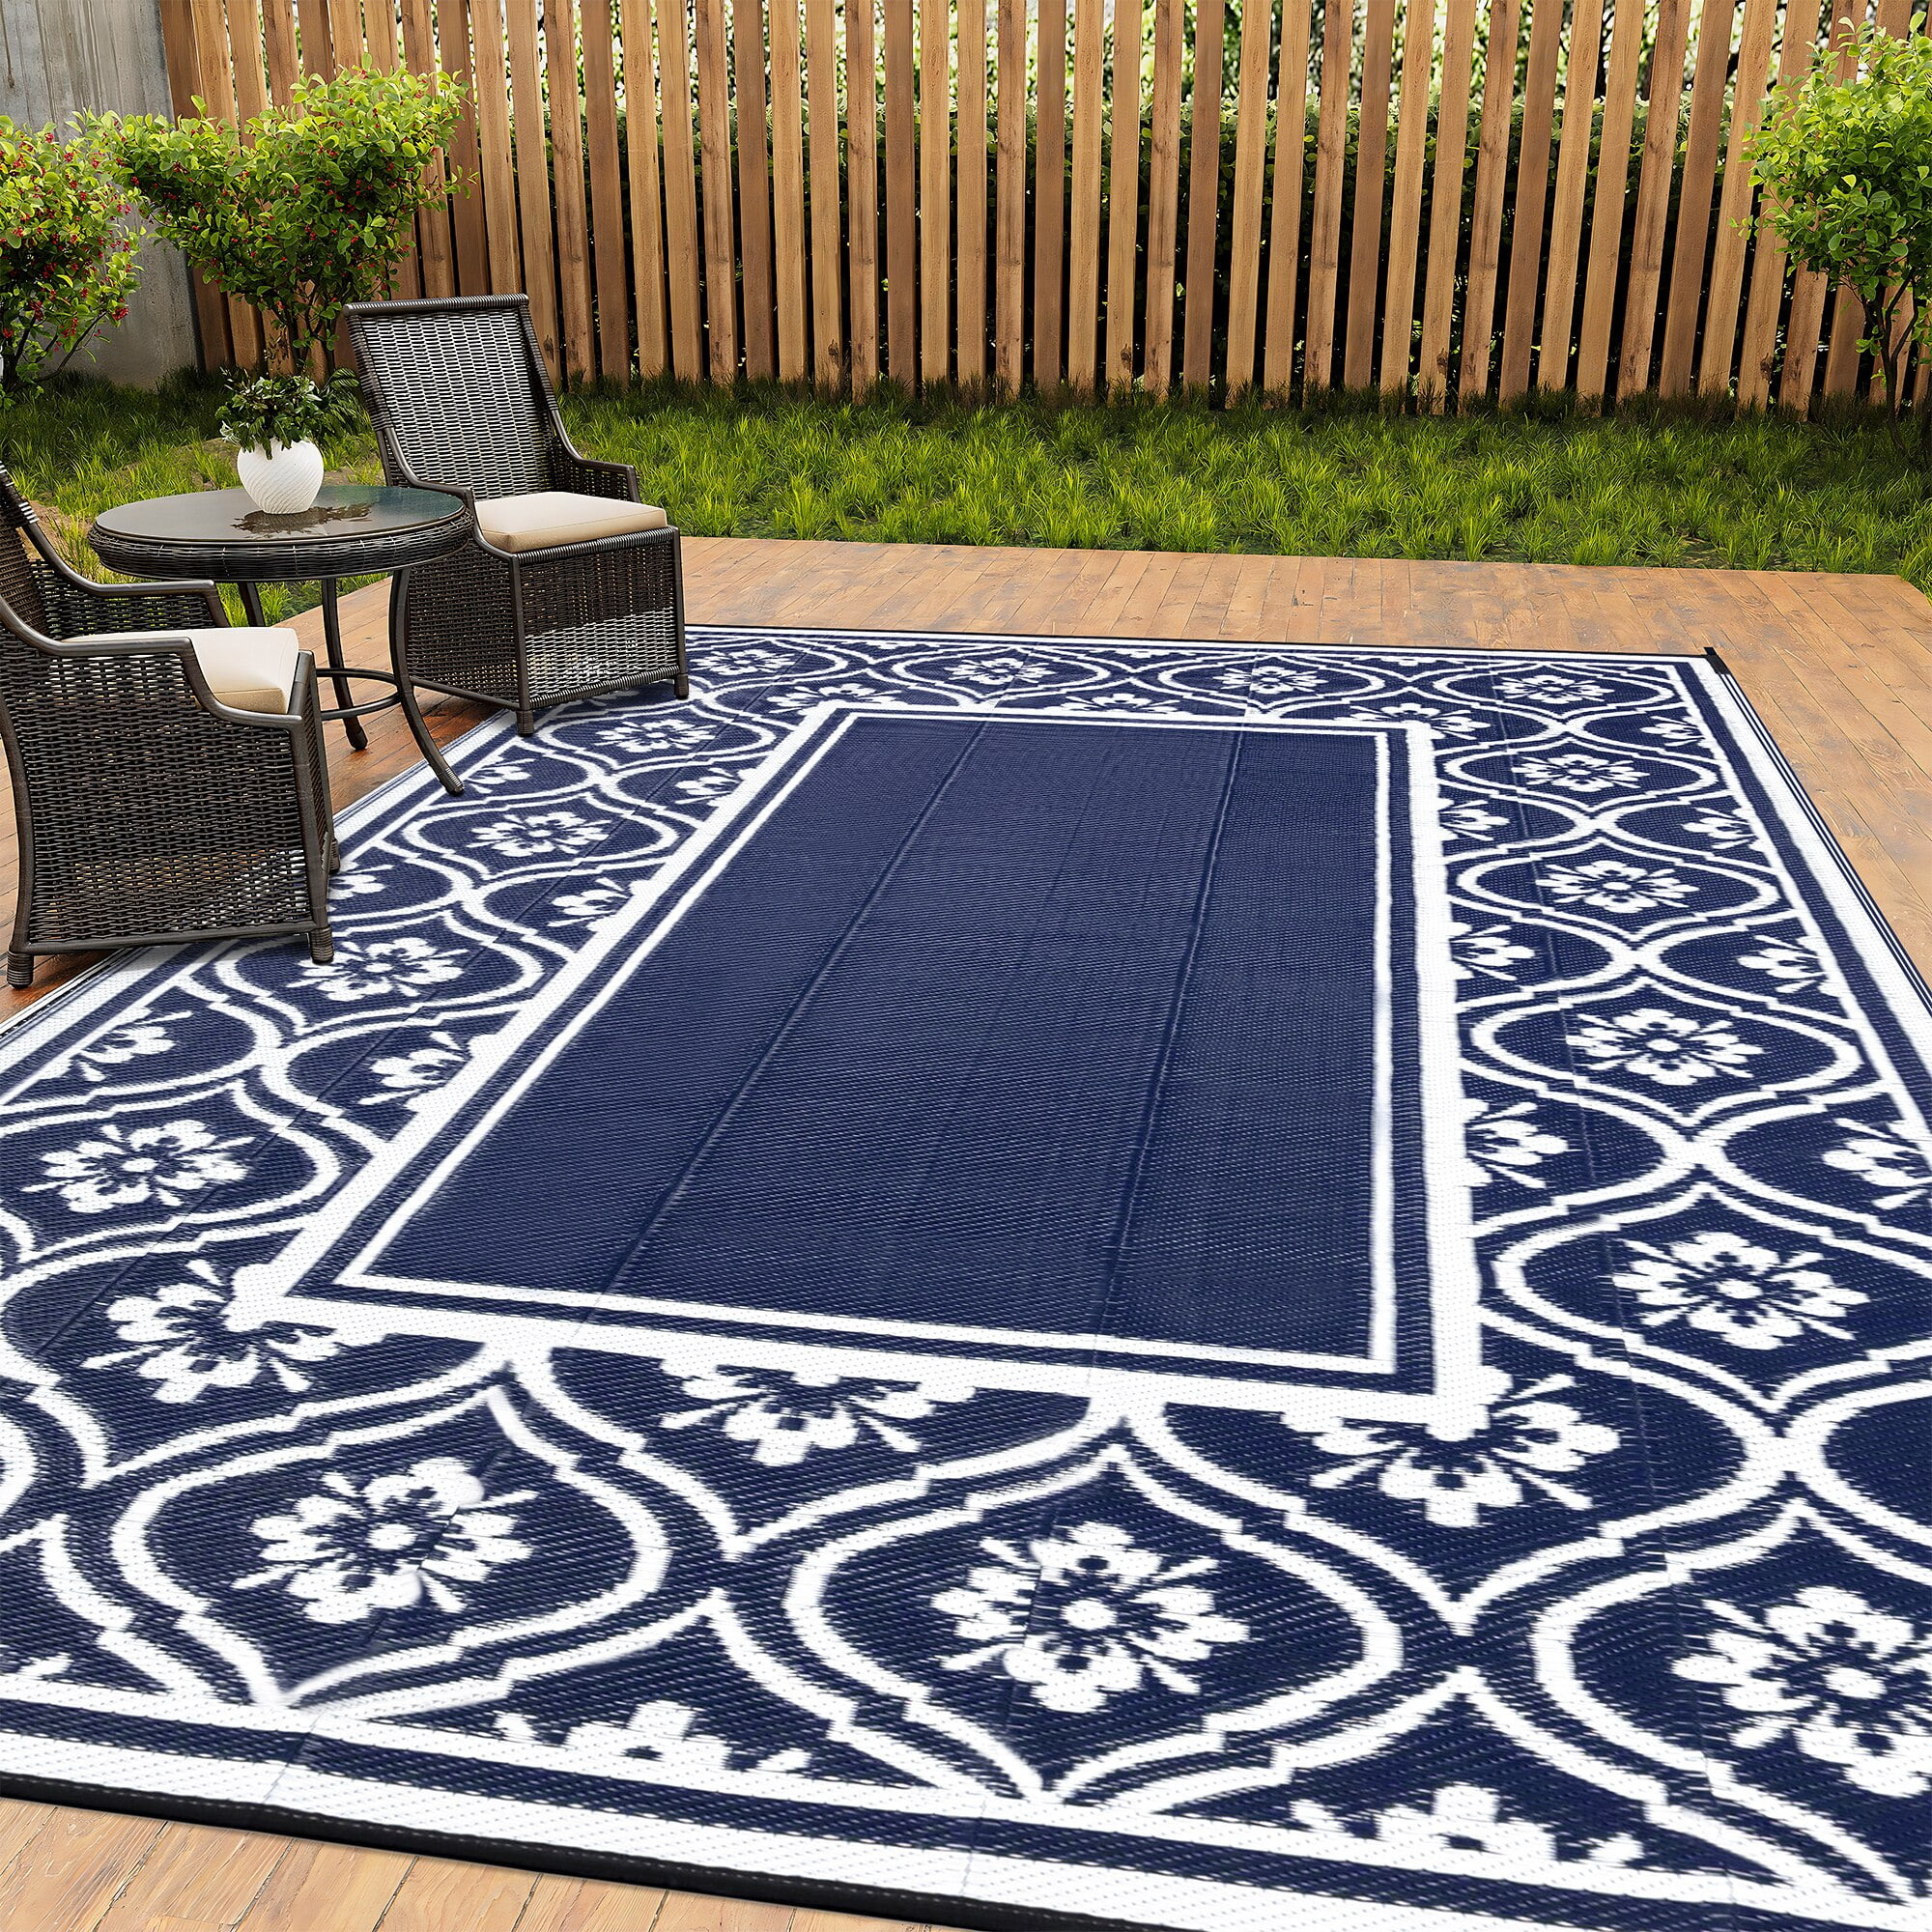 Outdoor Rug 8X10 Waterproof Durable Uv Coate Patio Rug Large Outdoor Carpet  Plas